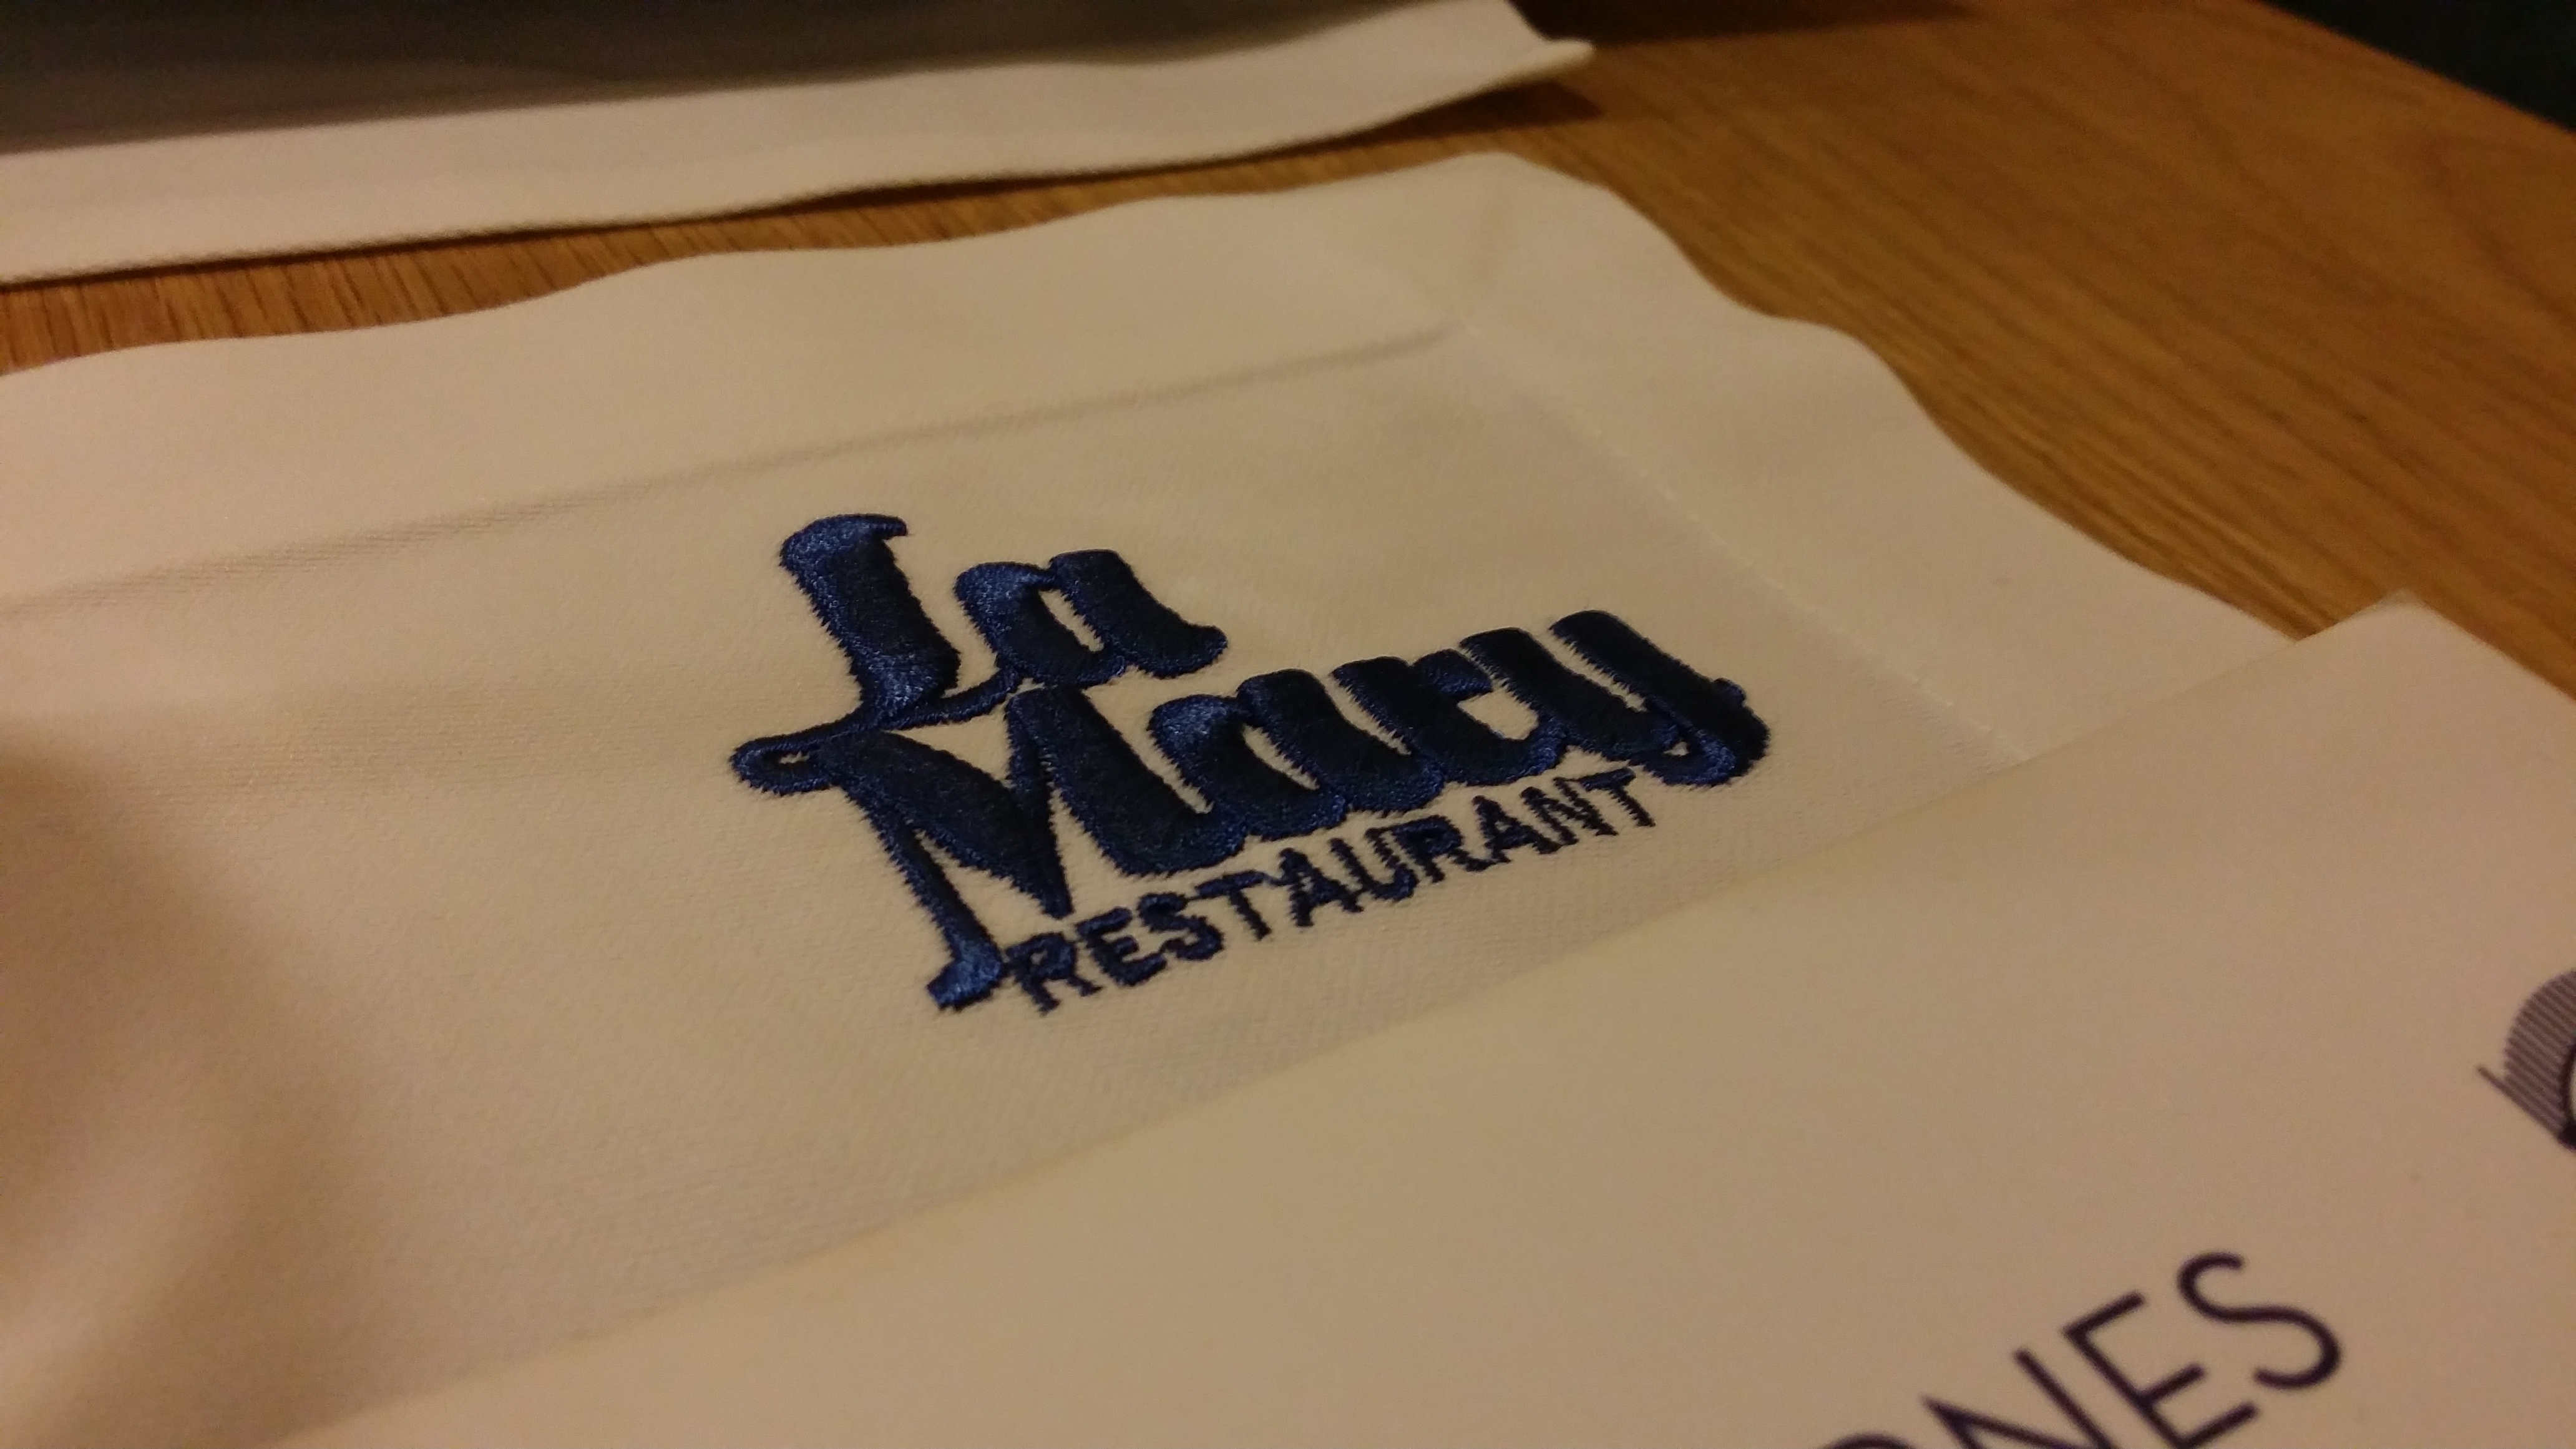 Restaurante La Mary Bilbao